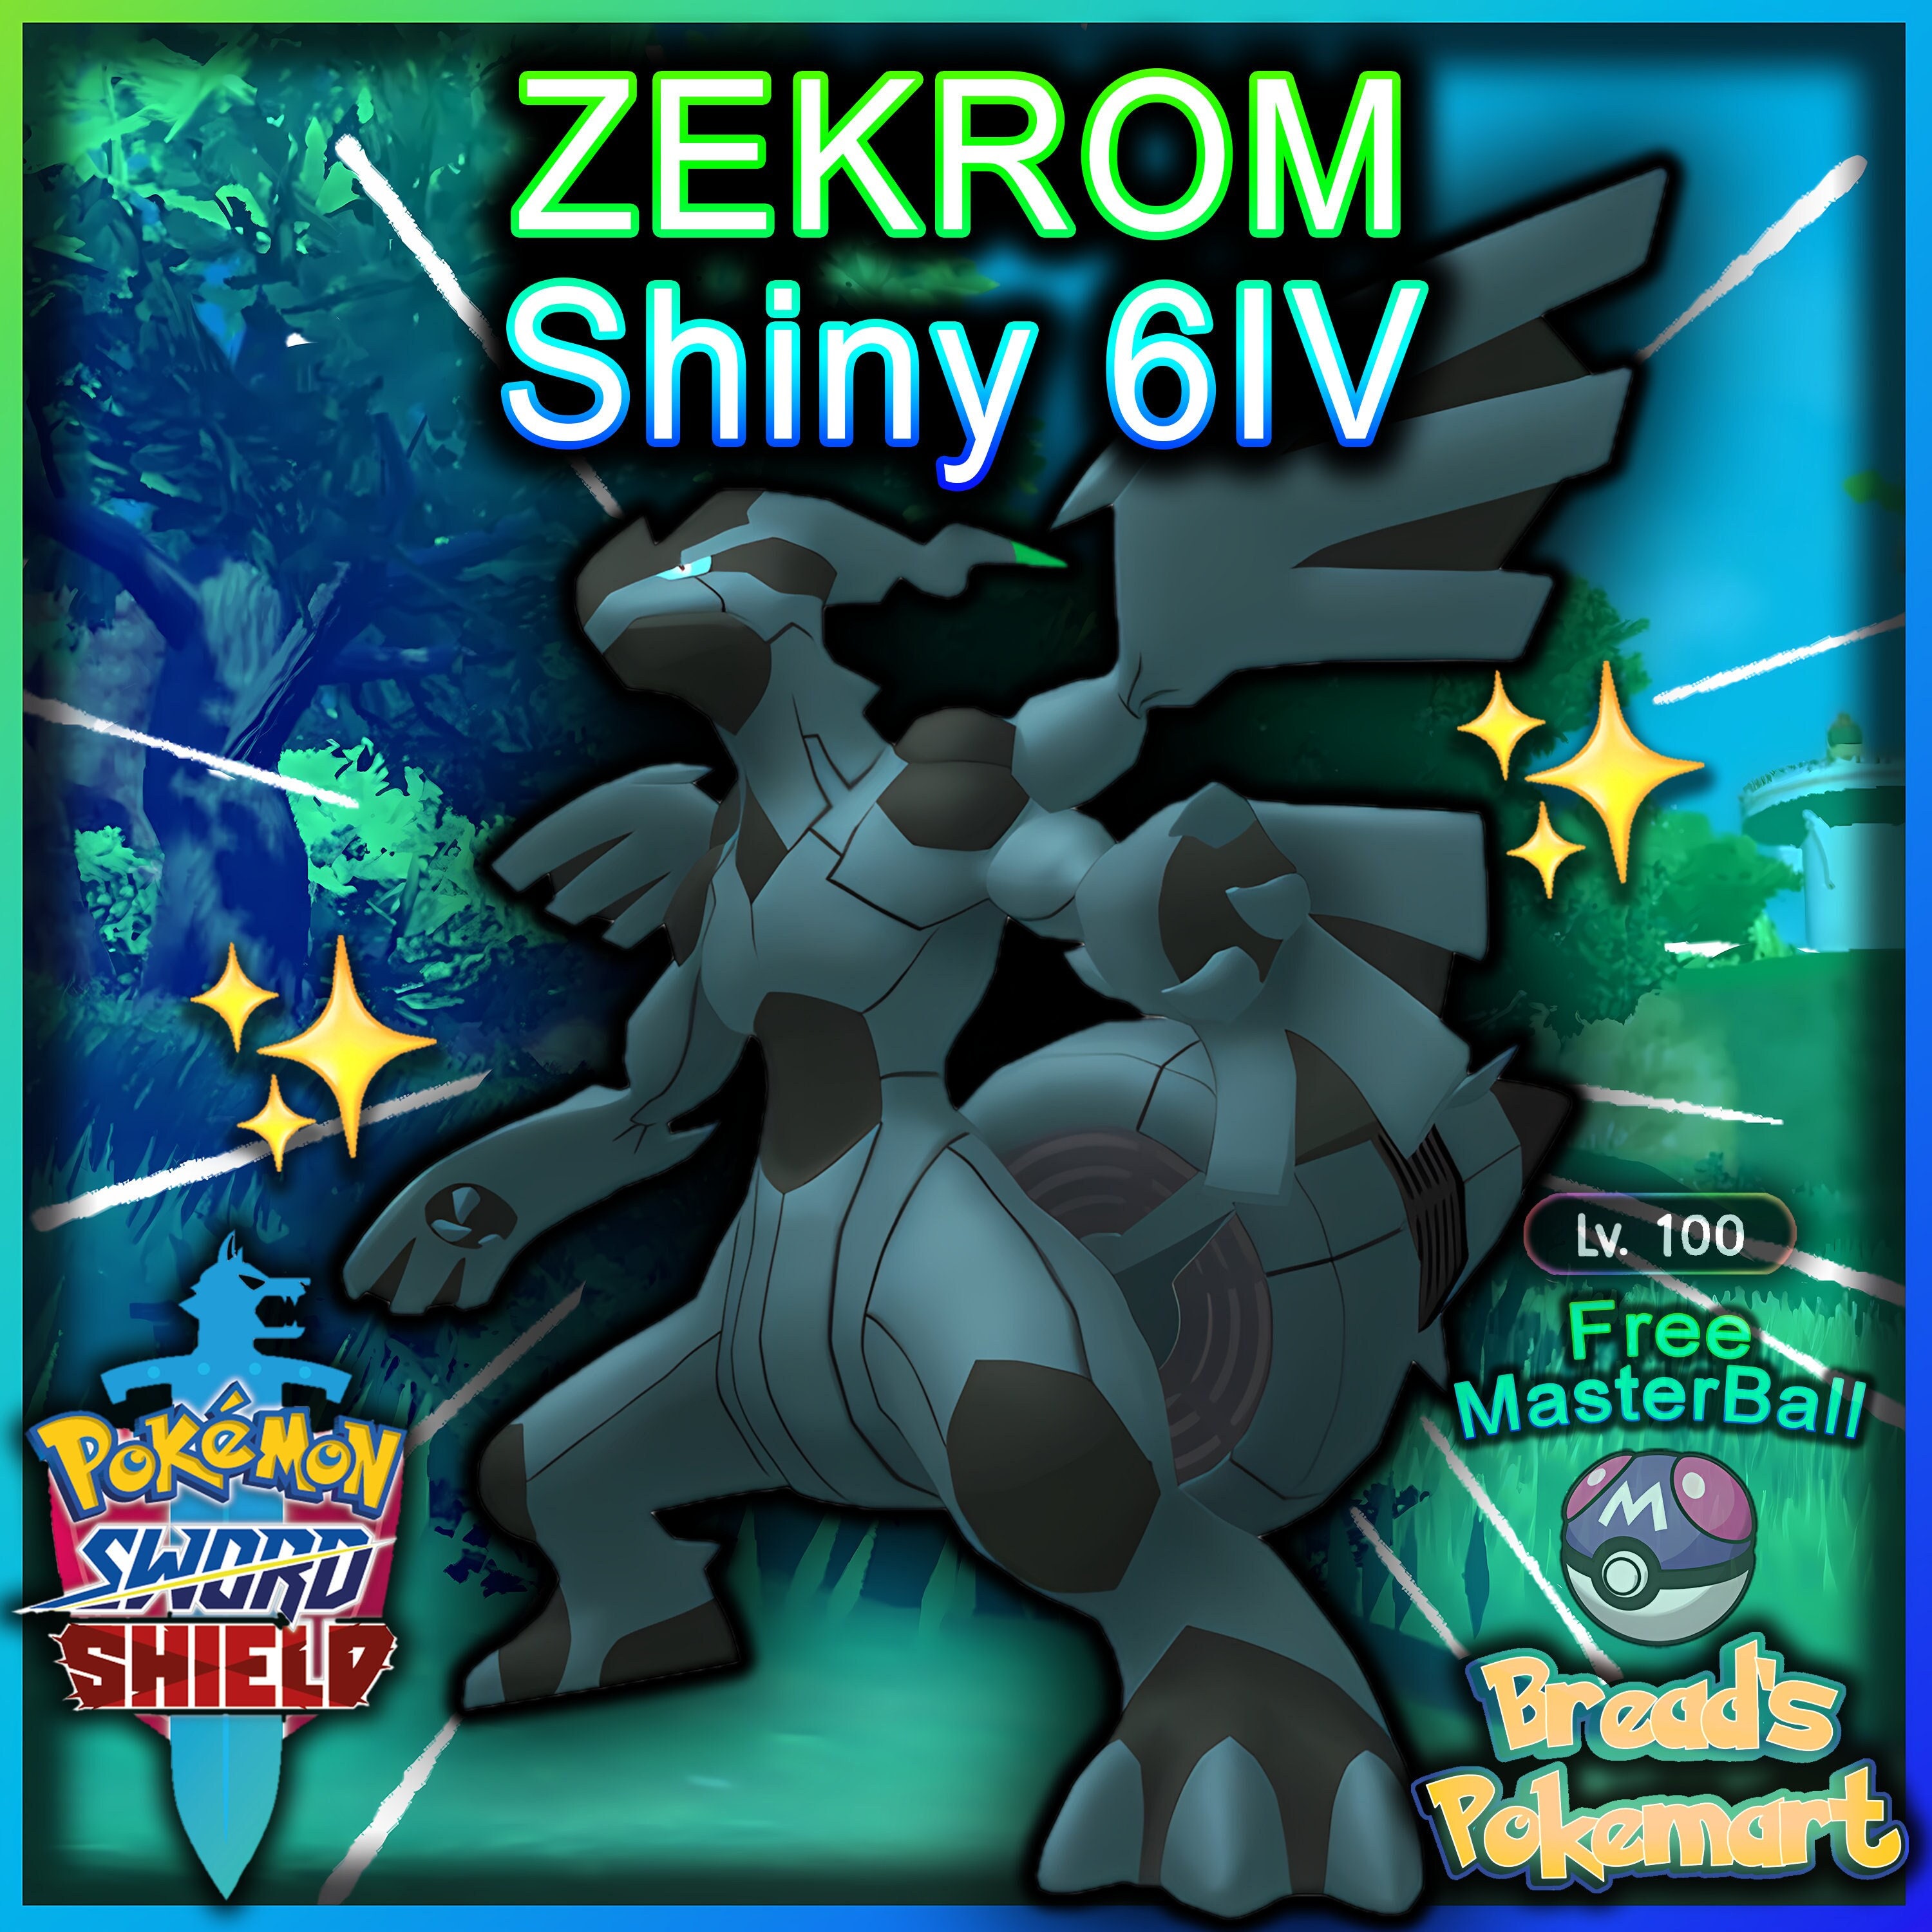 Can Zekrom be shiny in Pokemon GO? (January 2023)